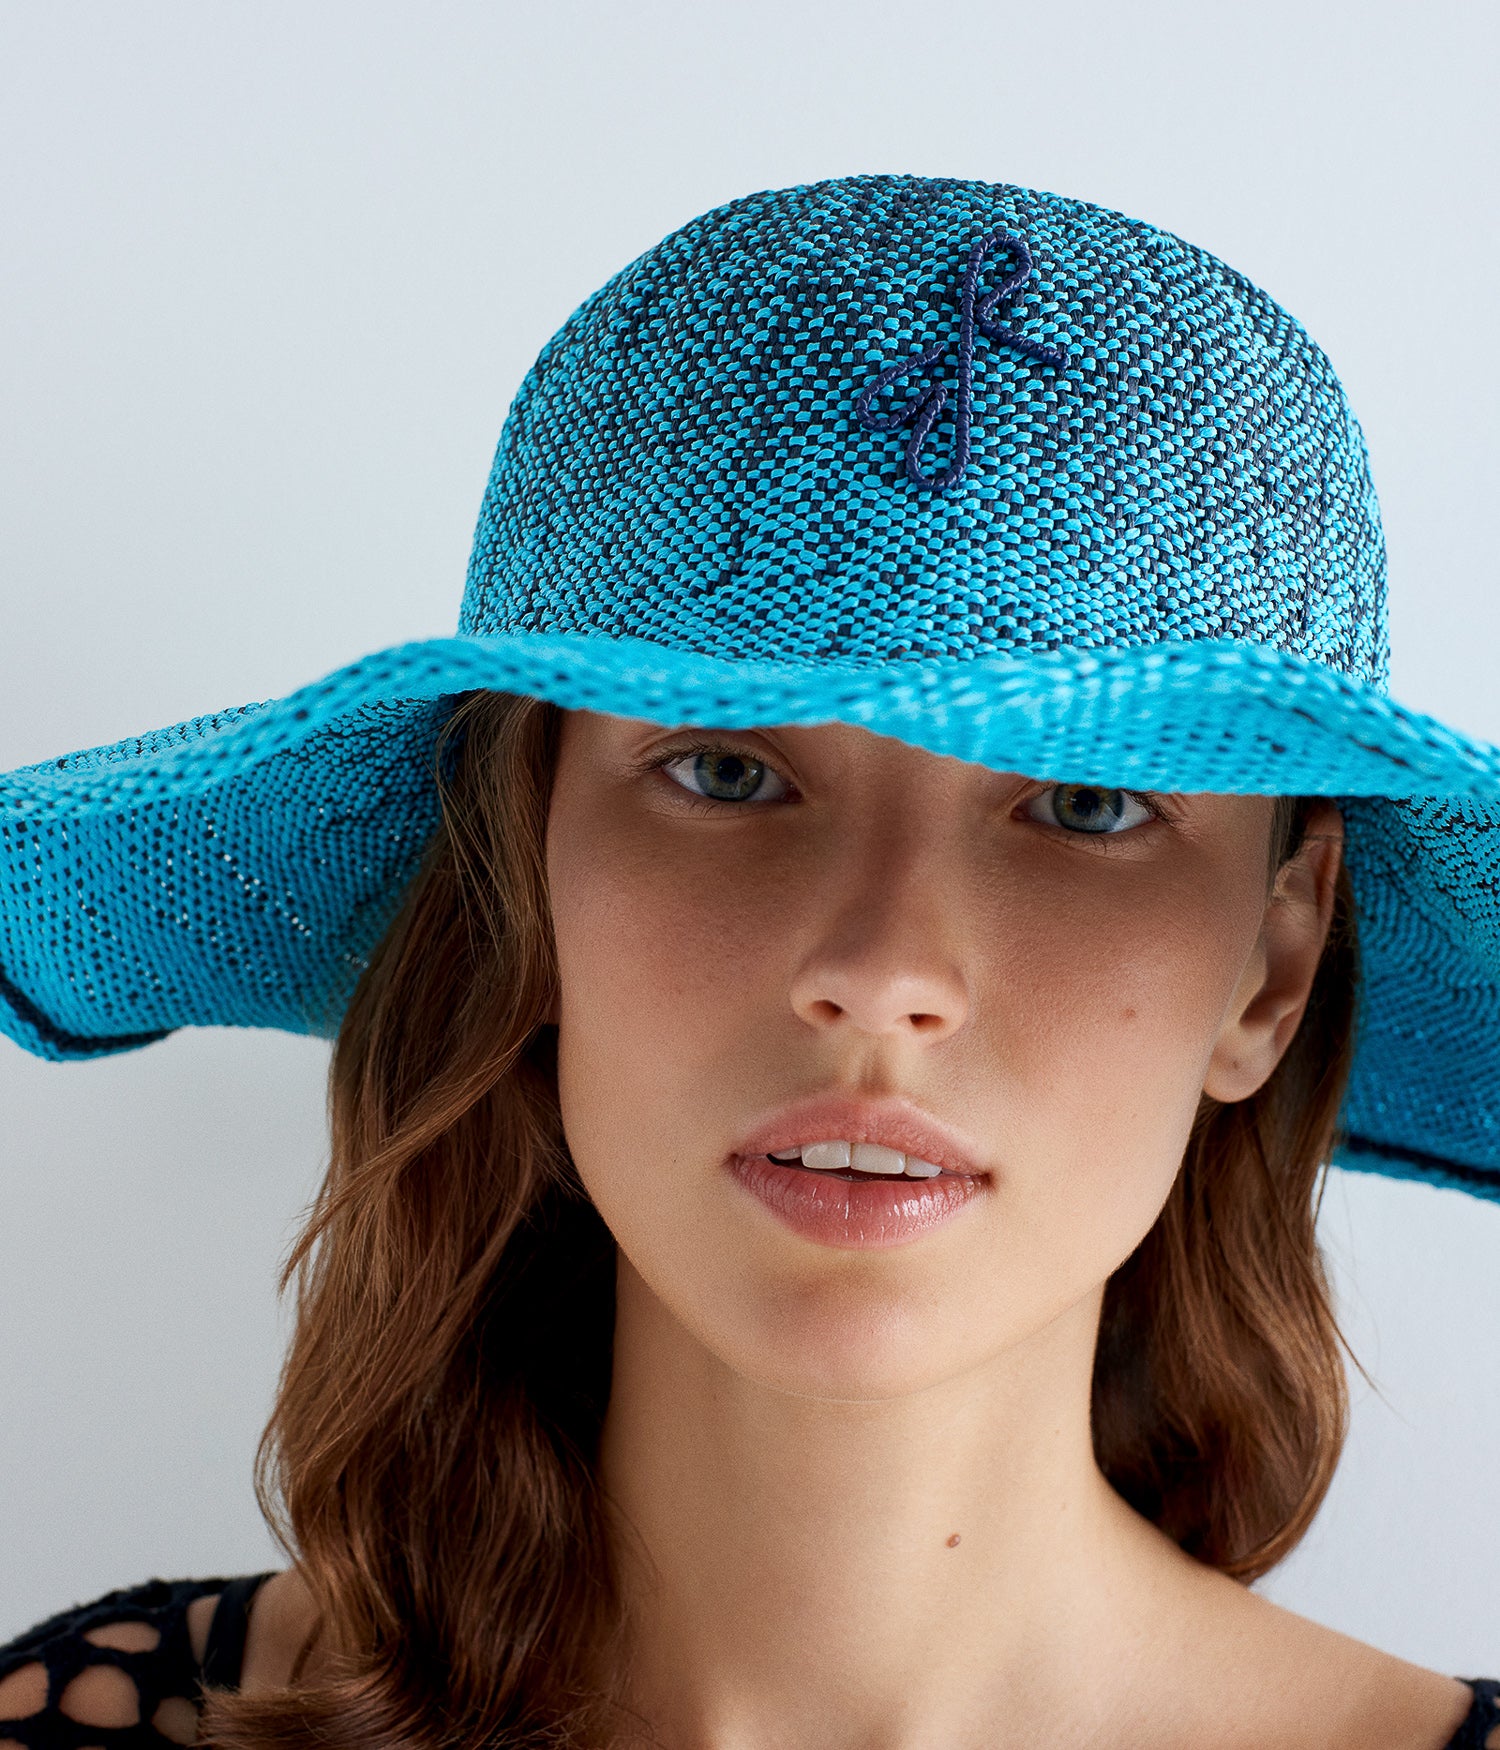 Monogram-Embellished Bucket Hat